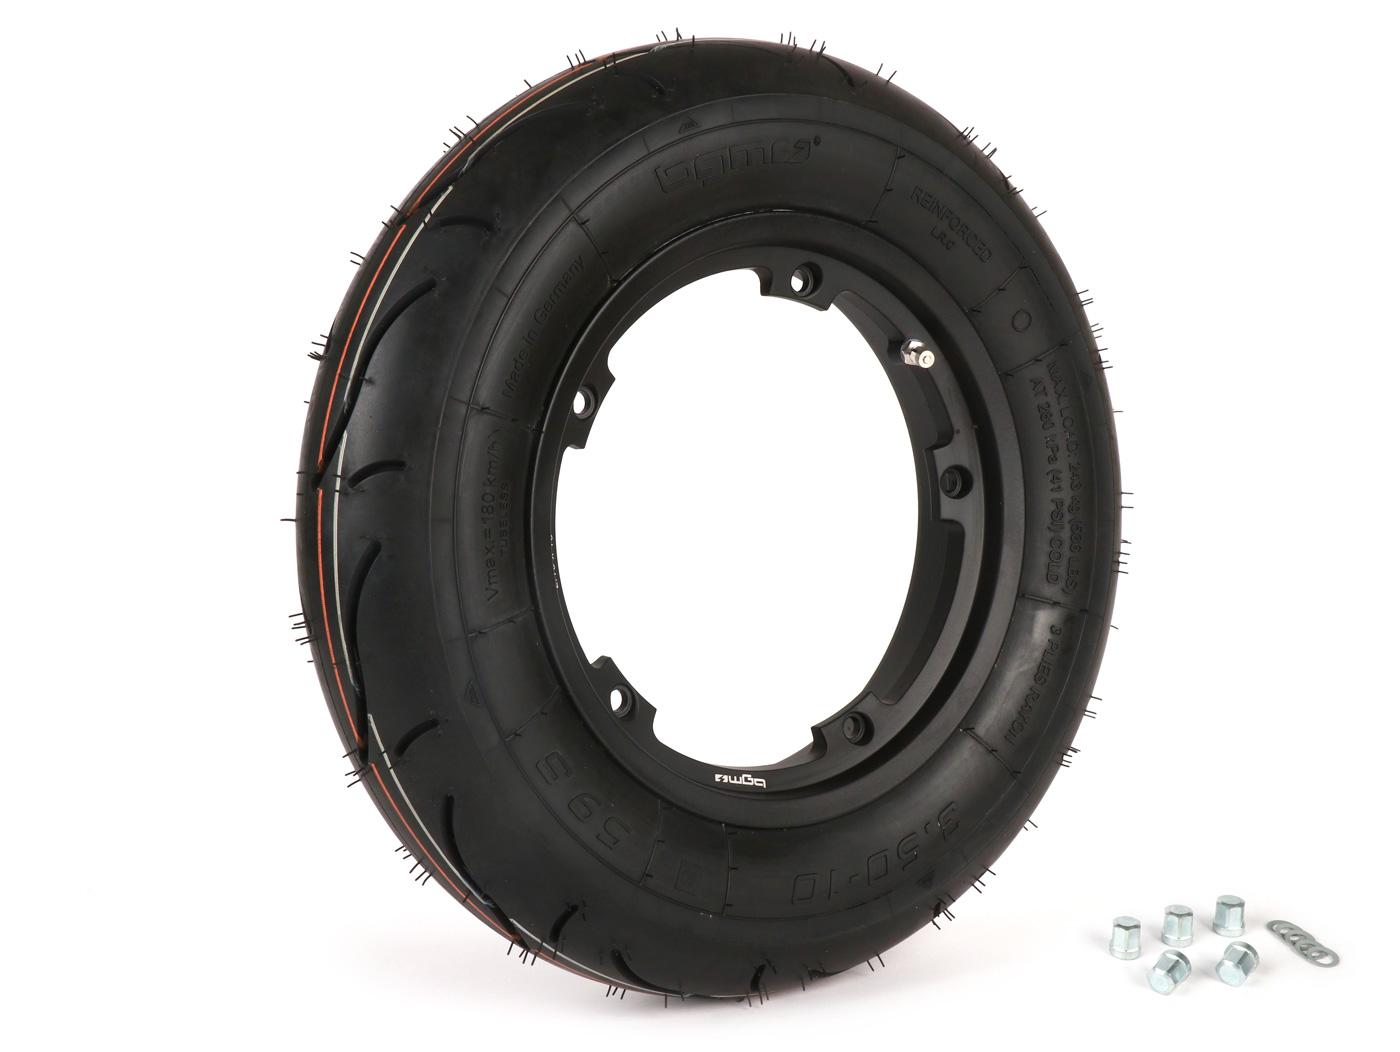 Kit de neumáticos y ruedas -BGM Sport, tubeless, Vespa- 3.50 - 10 pulgadas TL 59S (reforzado) - Llanta 2.10-10 negra